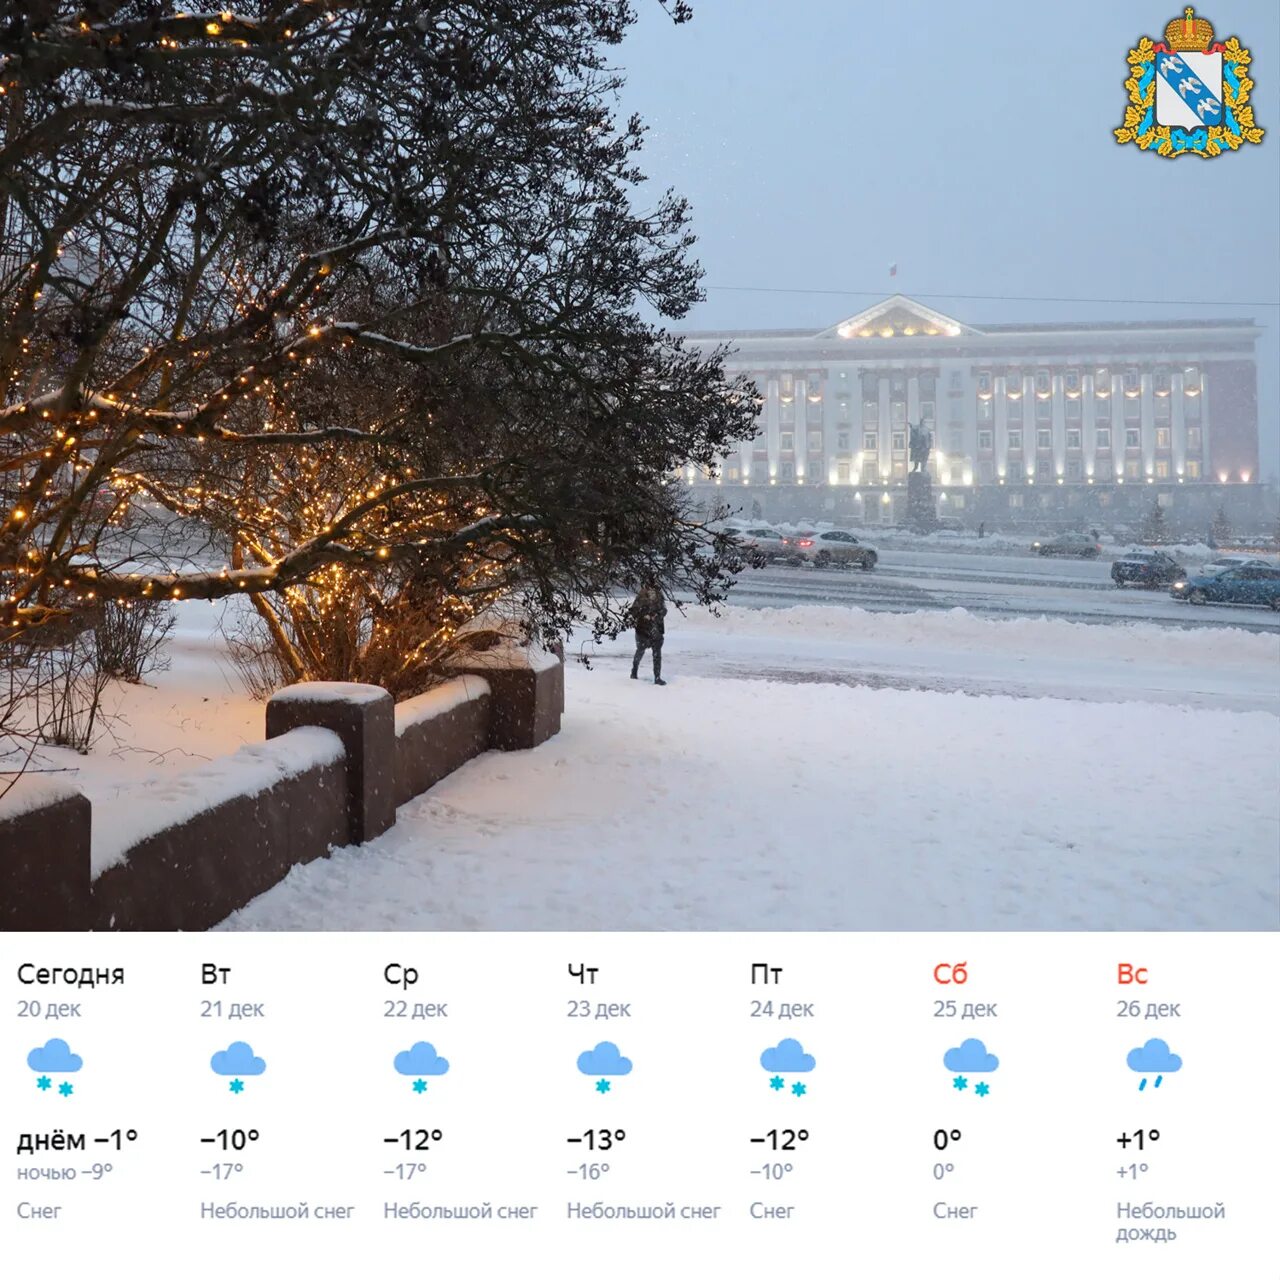 Снегопад в Курске в марте 2013. Снегопад в Курске в марте 2013 года. Белгород погода зимой. Курск погода фото сейчас.